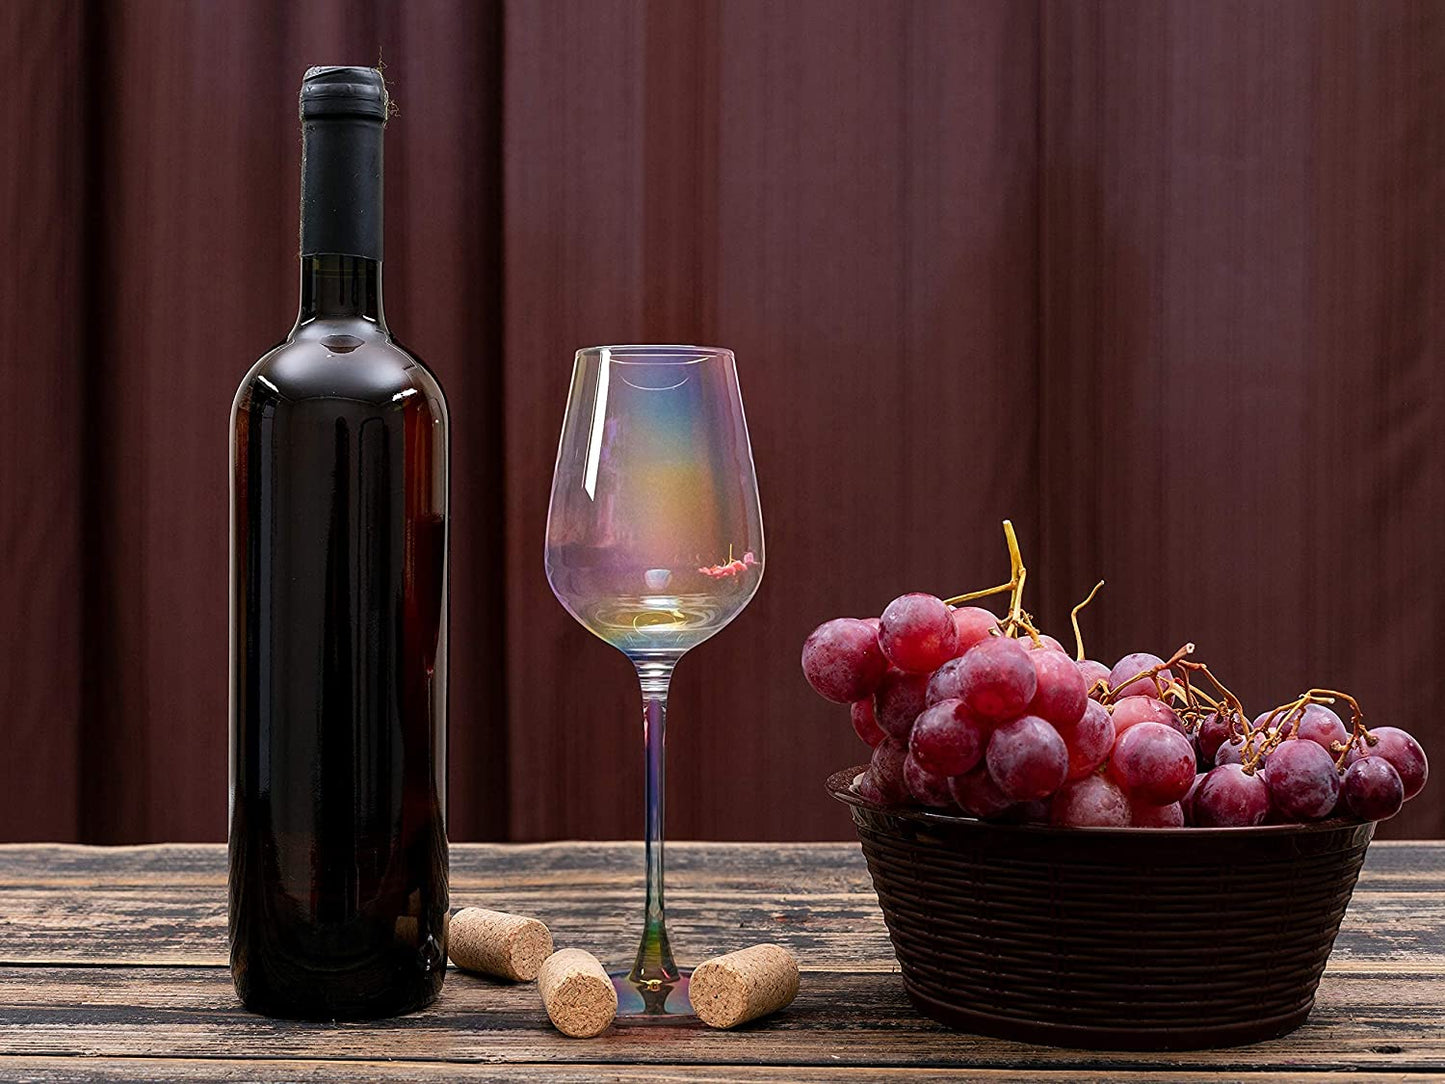 Iridescent Luster Large Radiance Wine Glasses